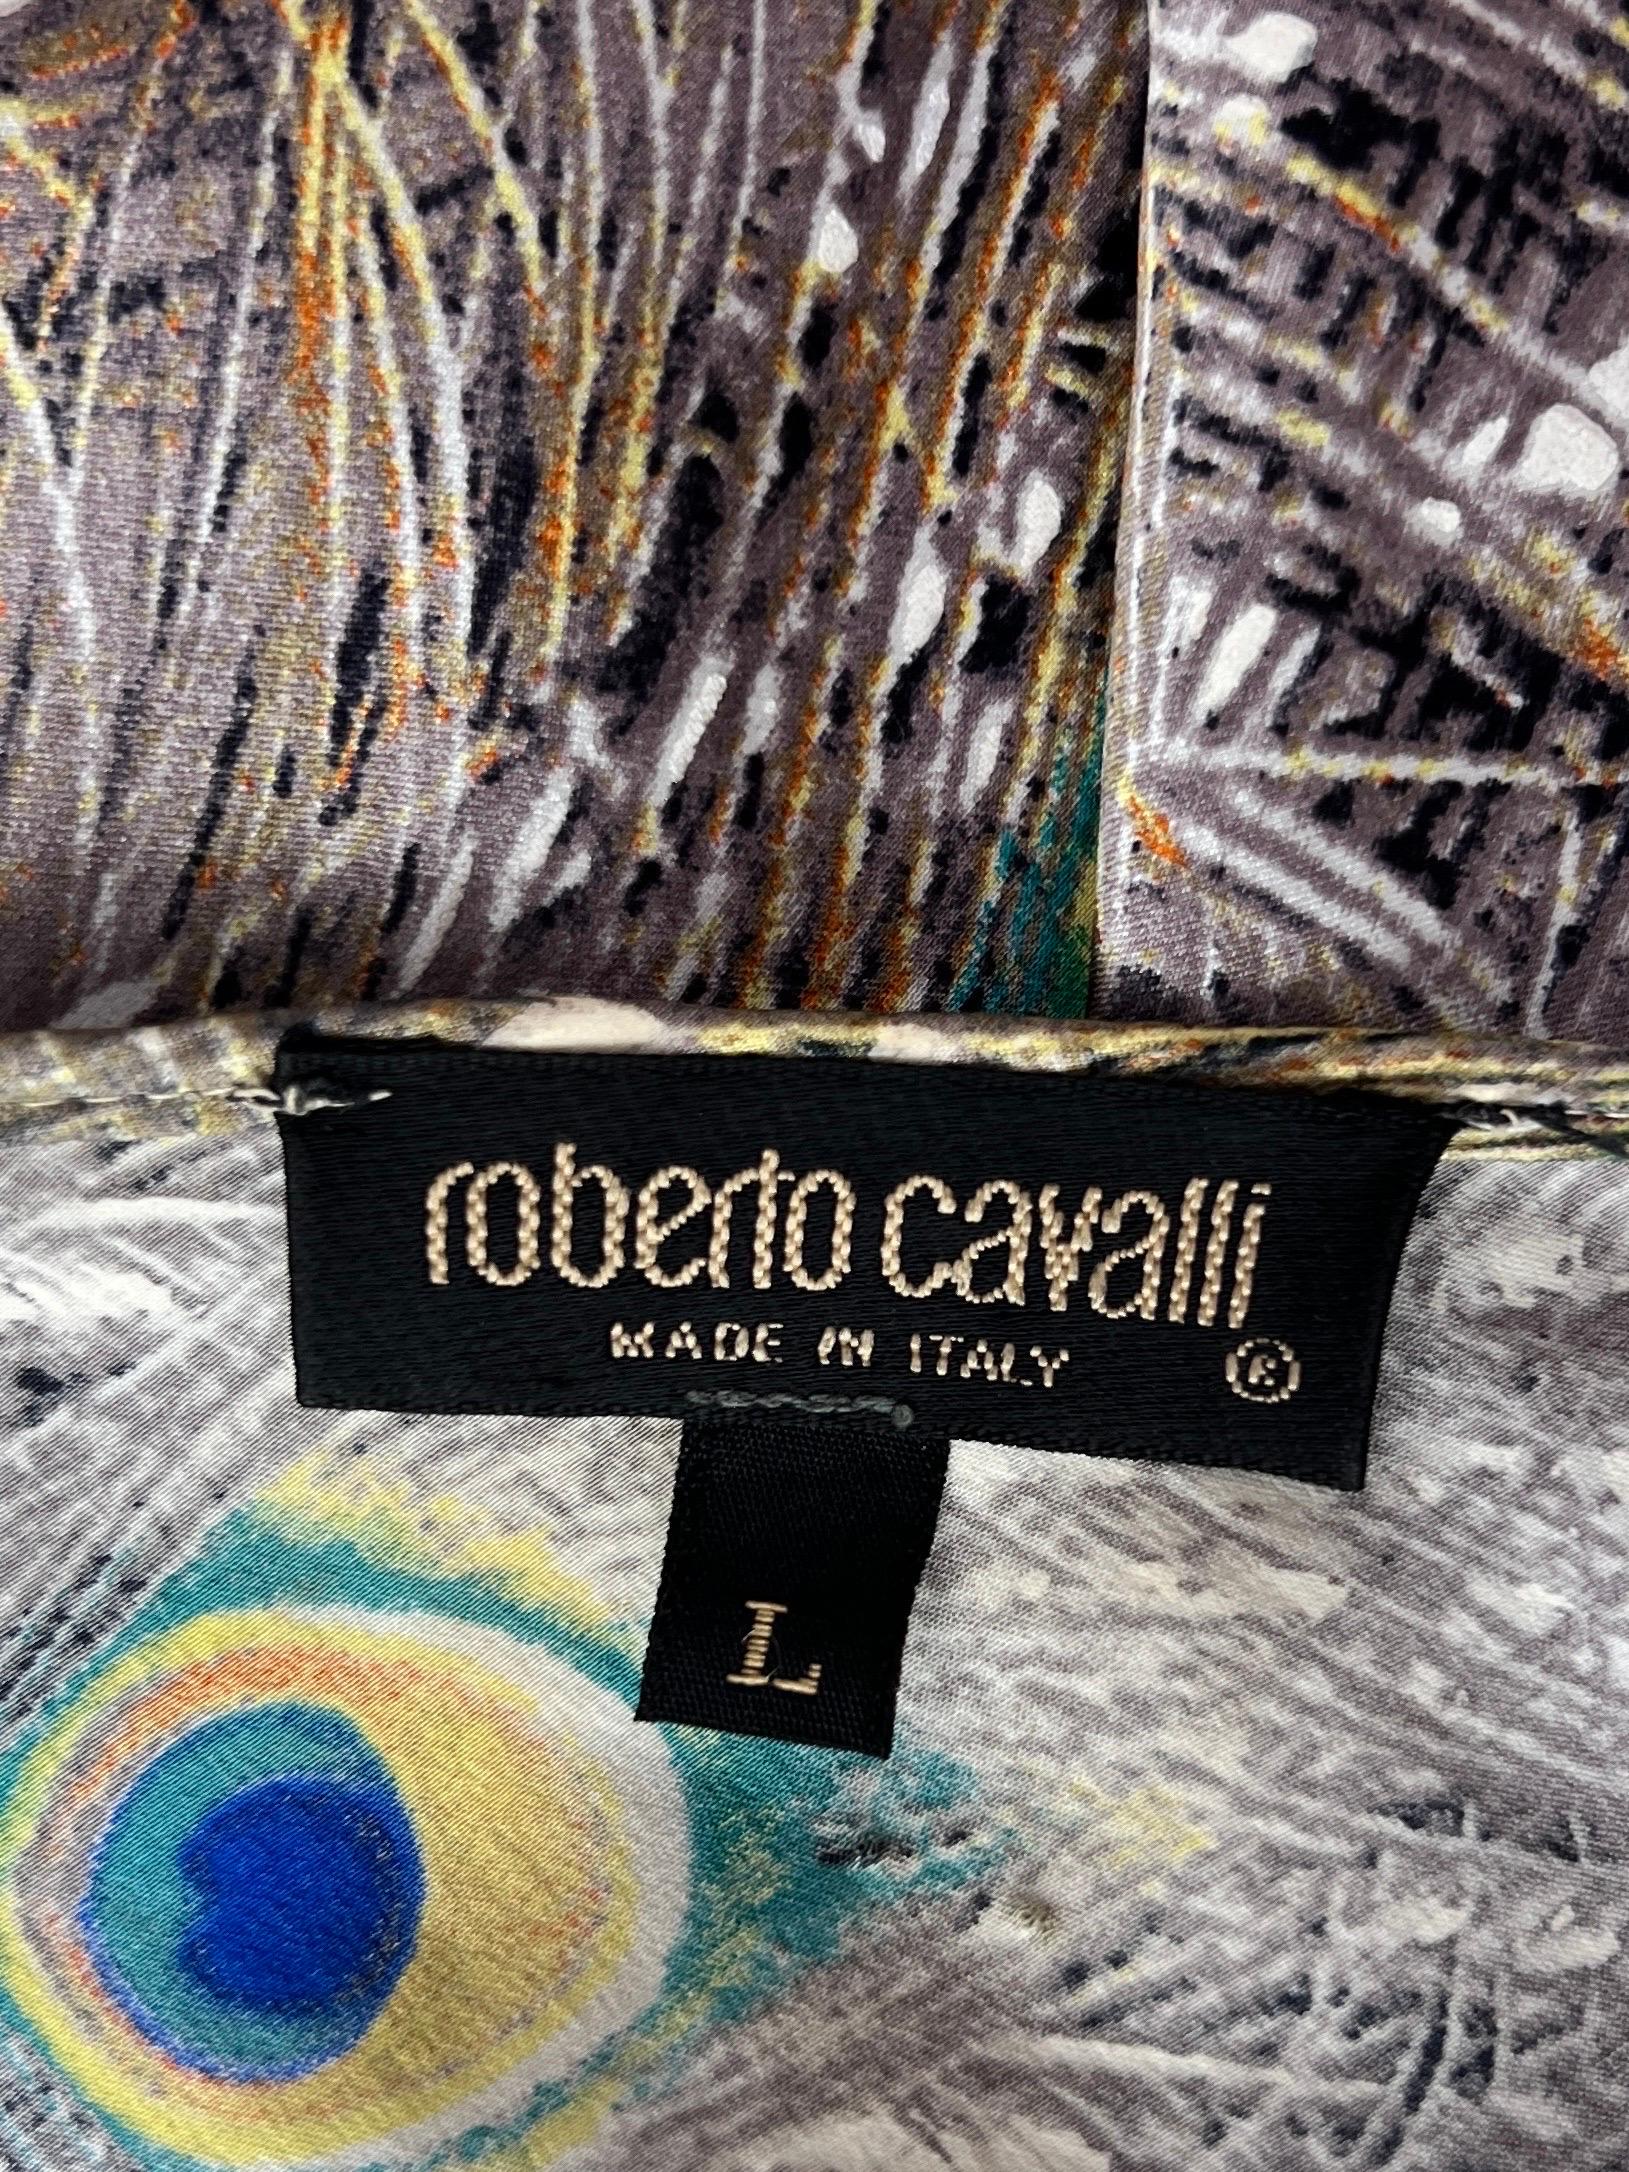 Roberto Cavalli Fall 1999 Peacock Print Bias Cut Silk Gown  For Sale 5